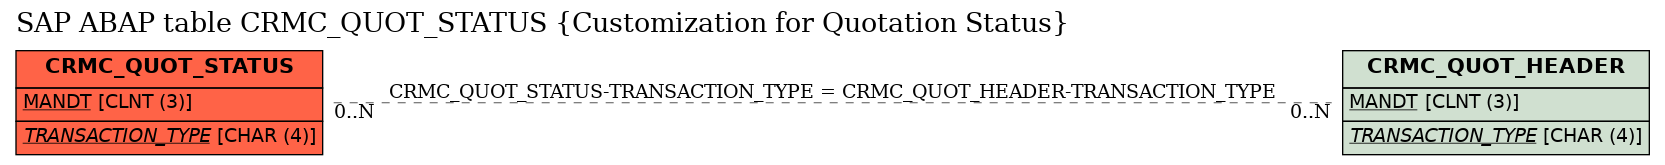 E-R Diagram for table CRMC_QUOT_STATUS (Customization for Quotation Status)